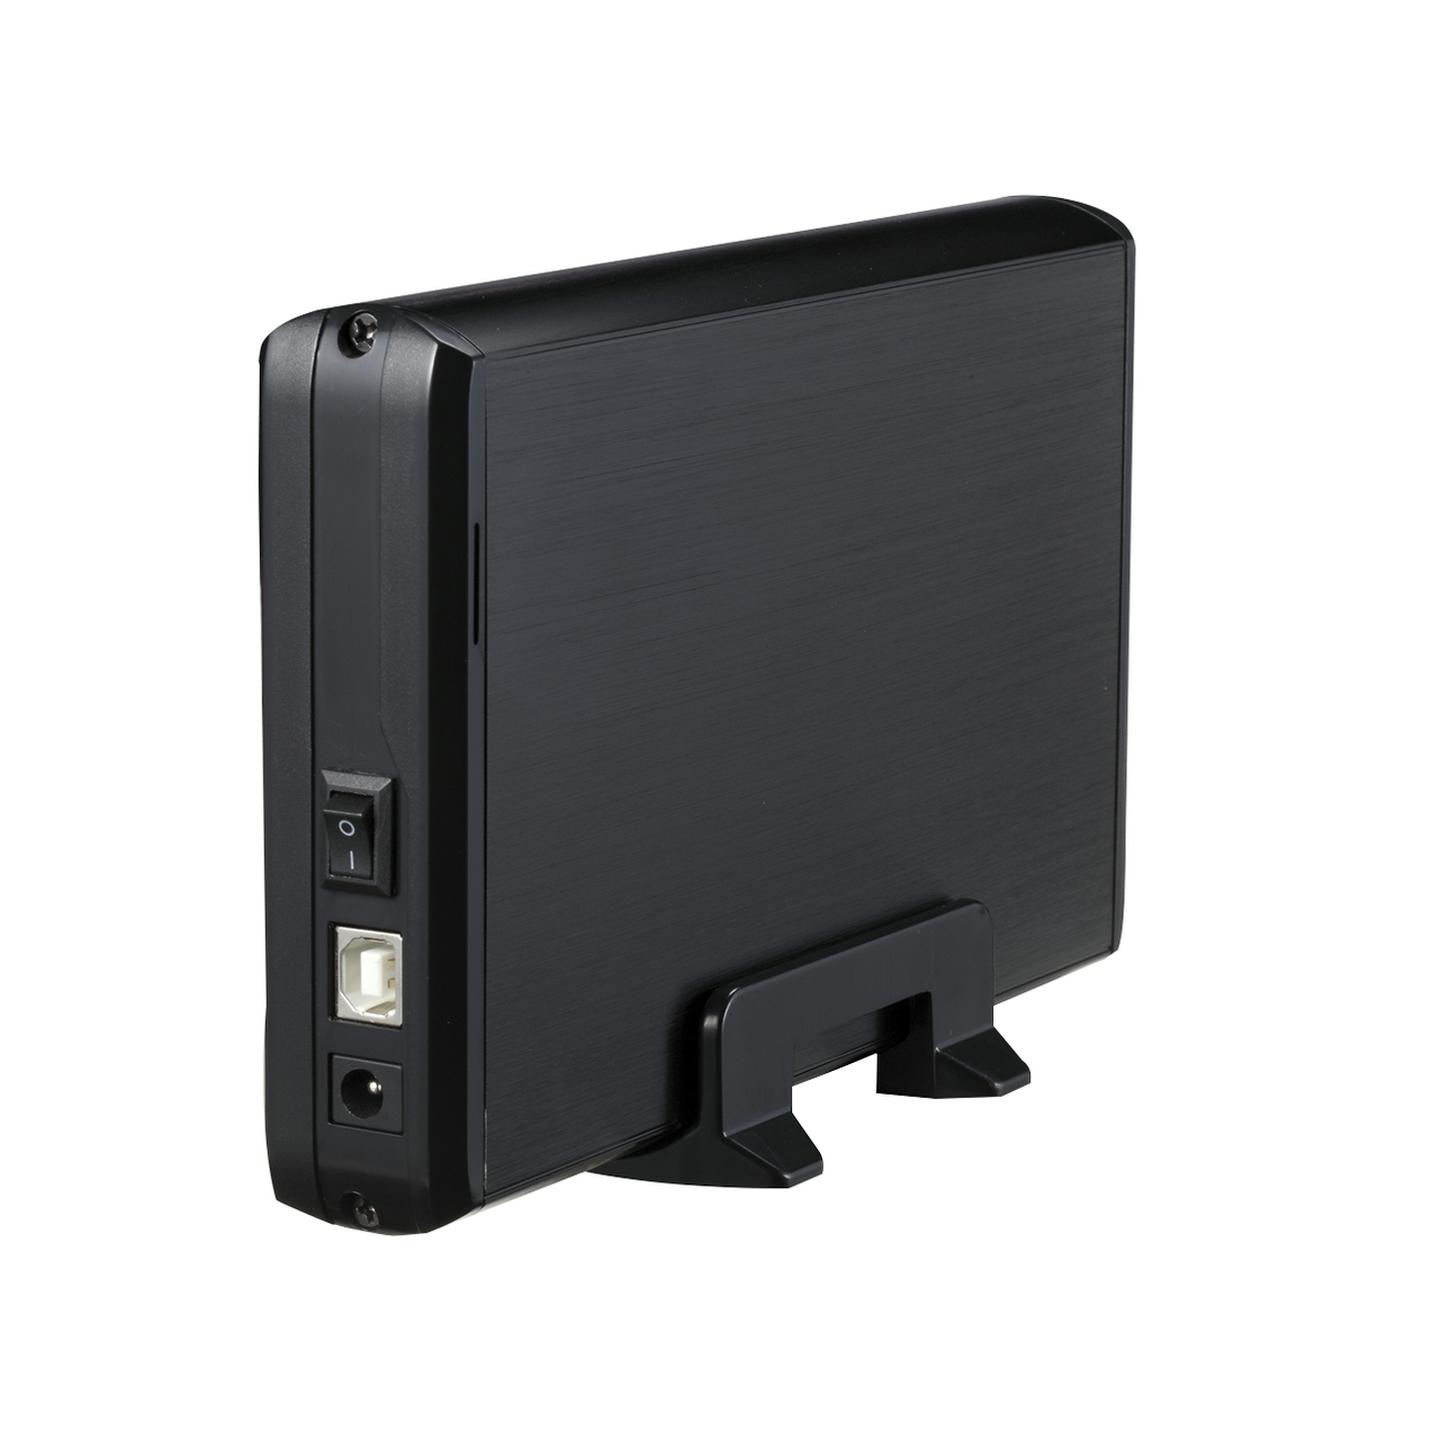 USB 2.0 External 3.5 HDD Case